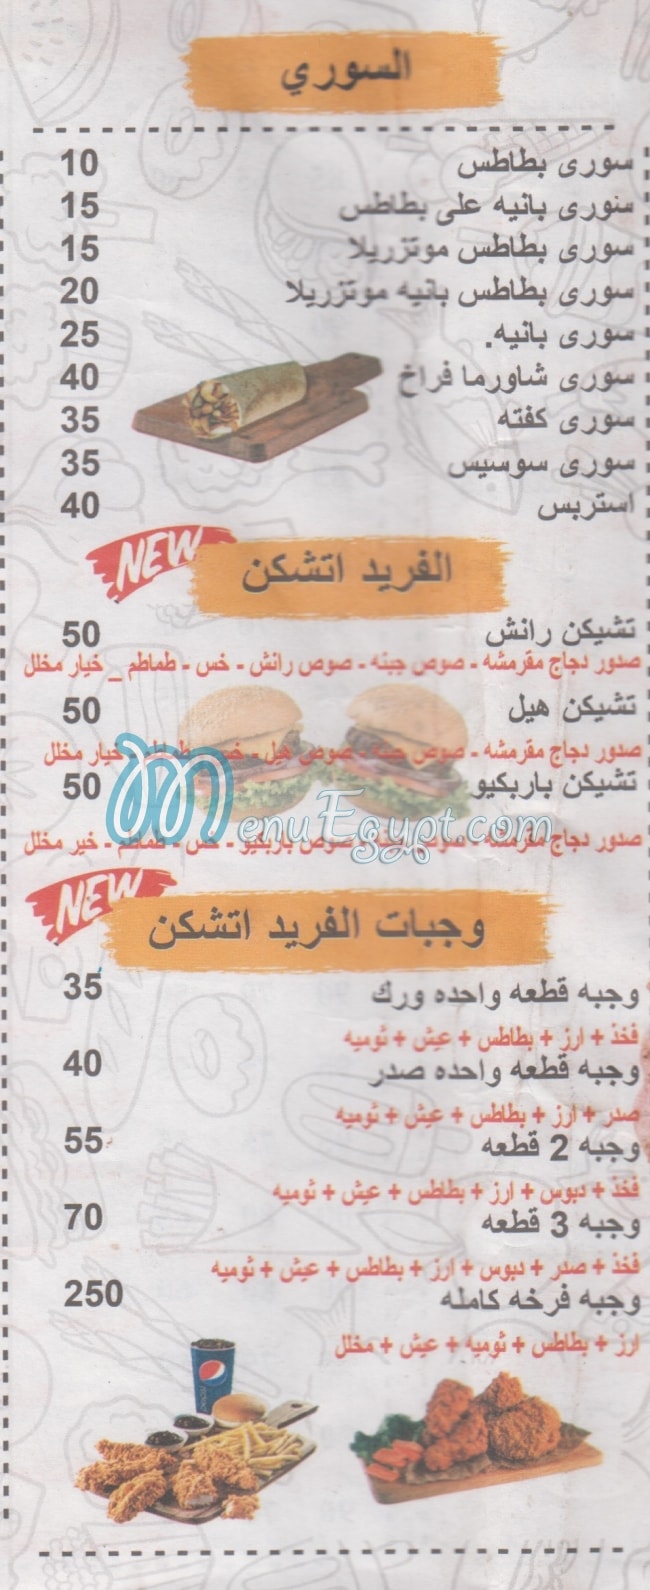 crepe meezo menu Egypt